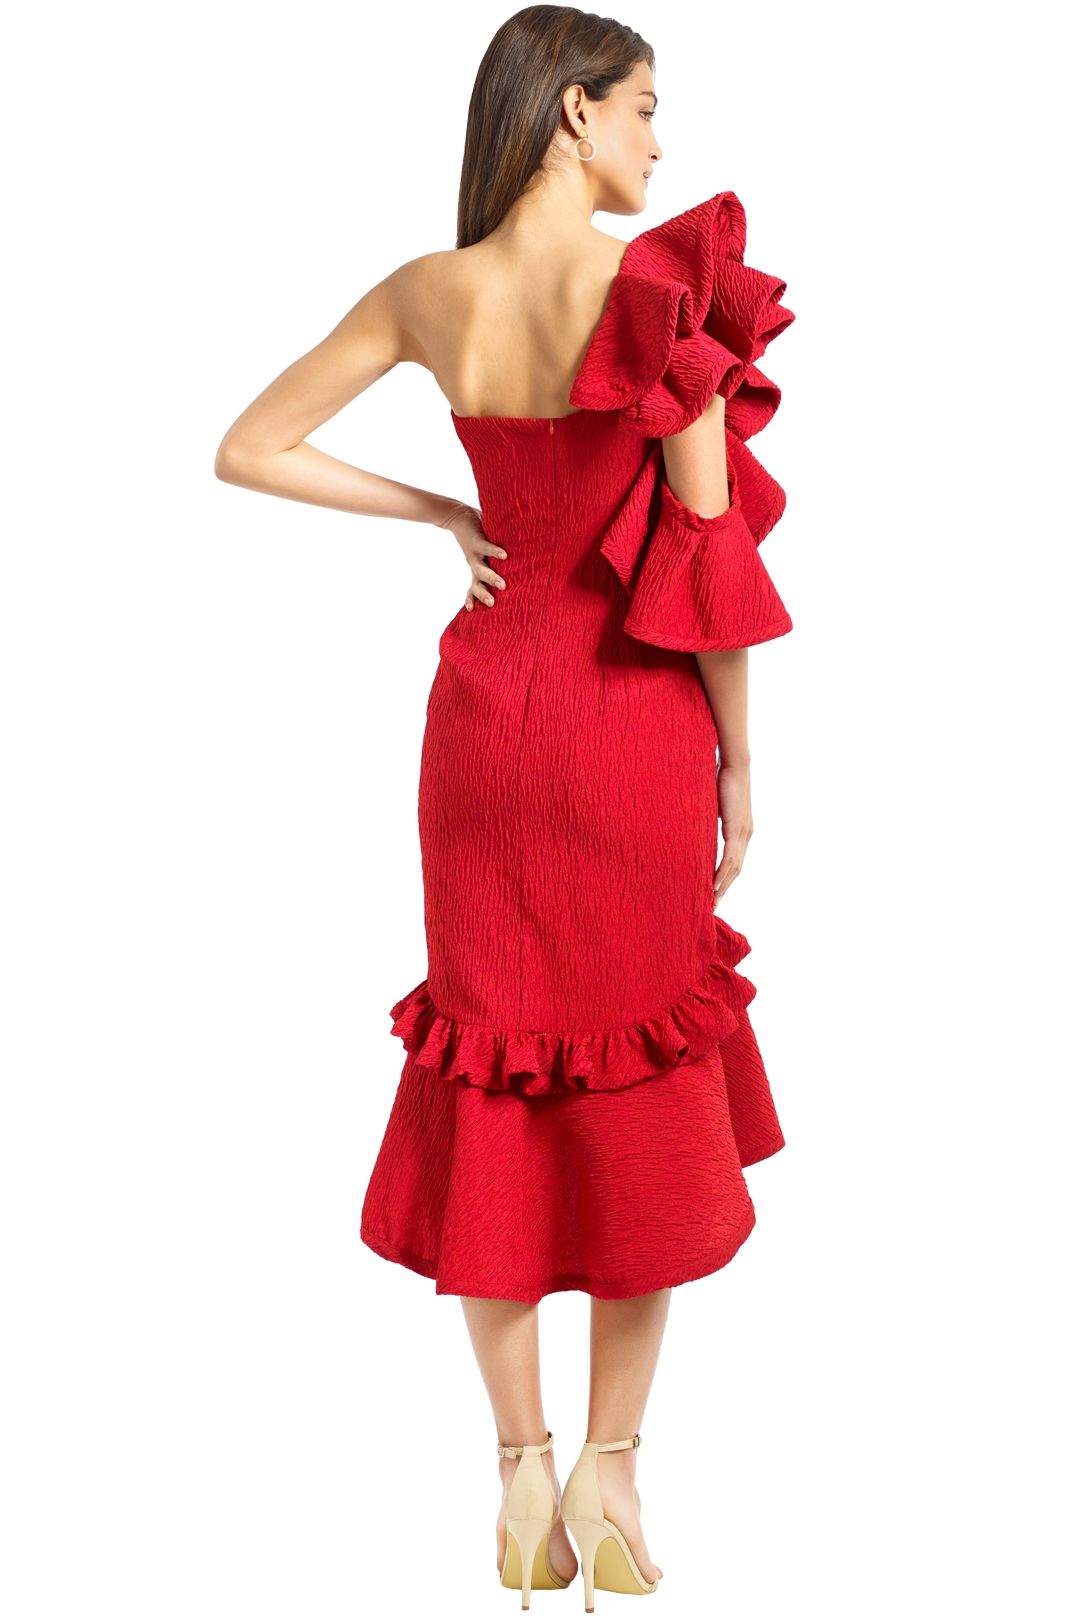 Nicola Finetti - Deidre Dress - Red - Back